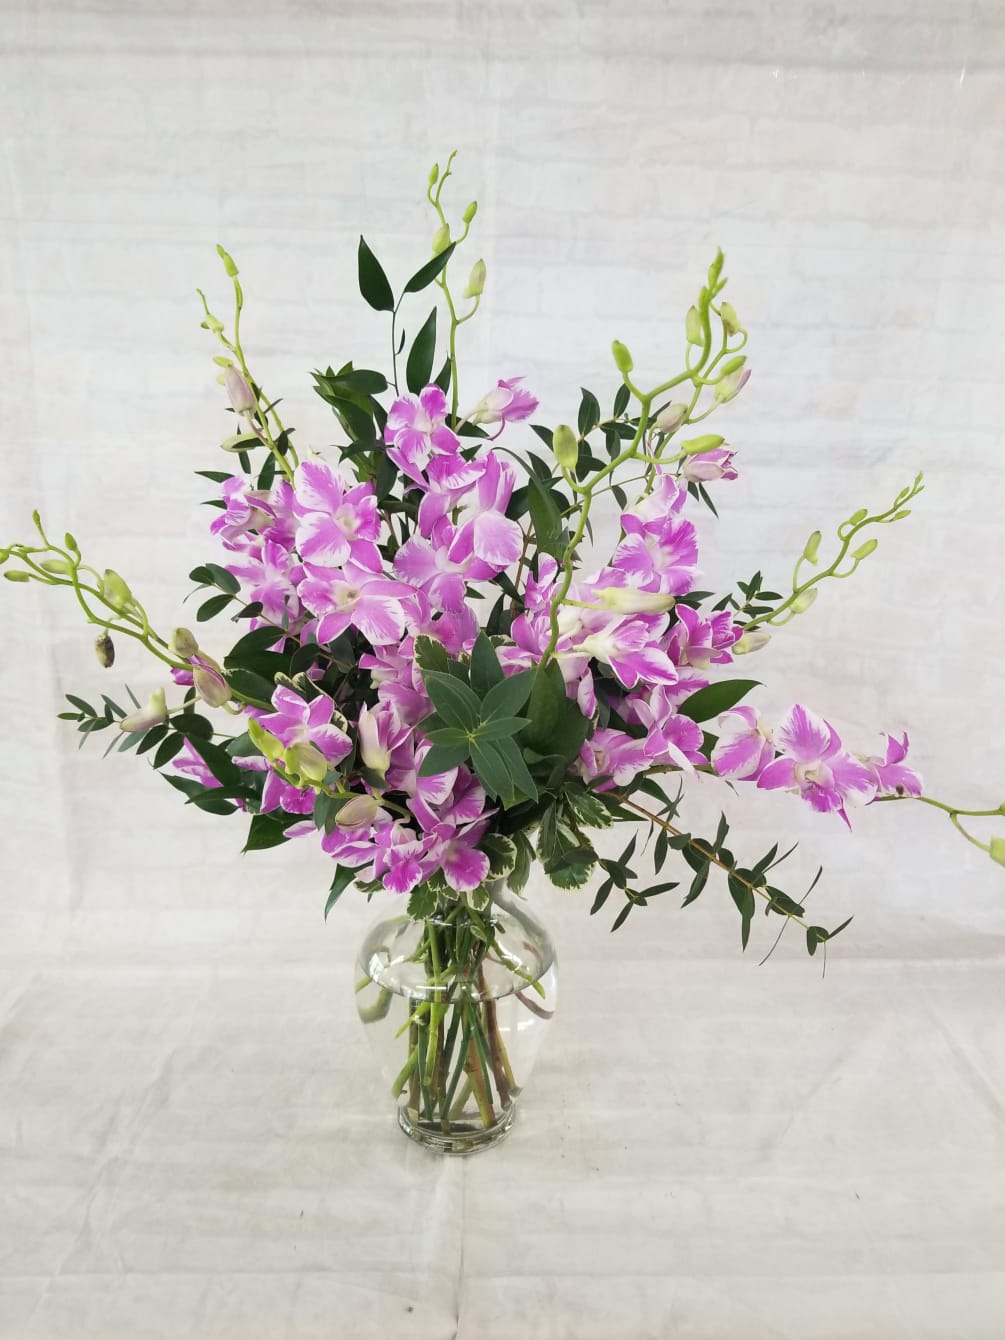 Select this unique and elegant arrangement of dendrobium orchids. 
Color of orchids